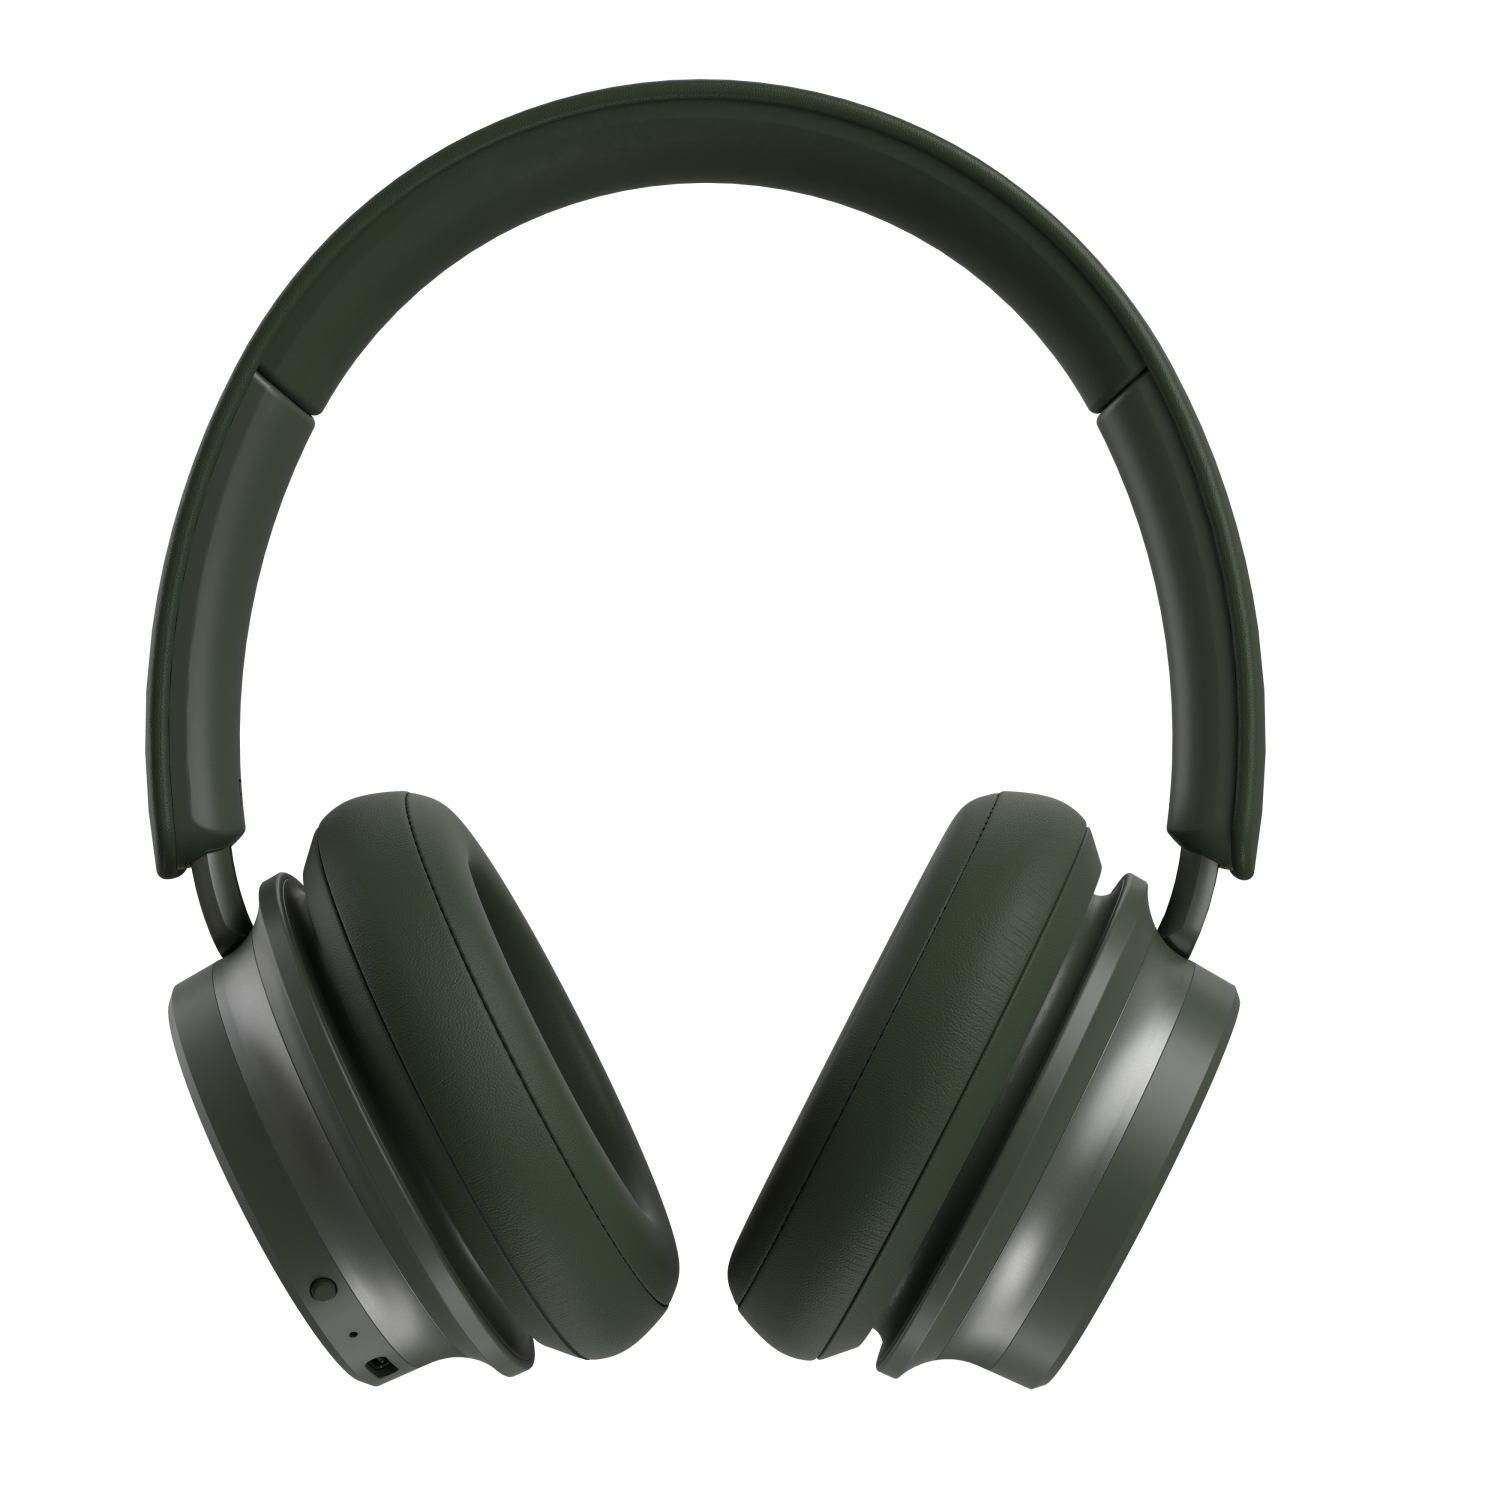 DALI IO-6 Premium Wireless Over-The-Ear Headphone with ANC - Army Green